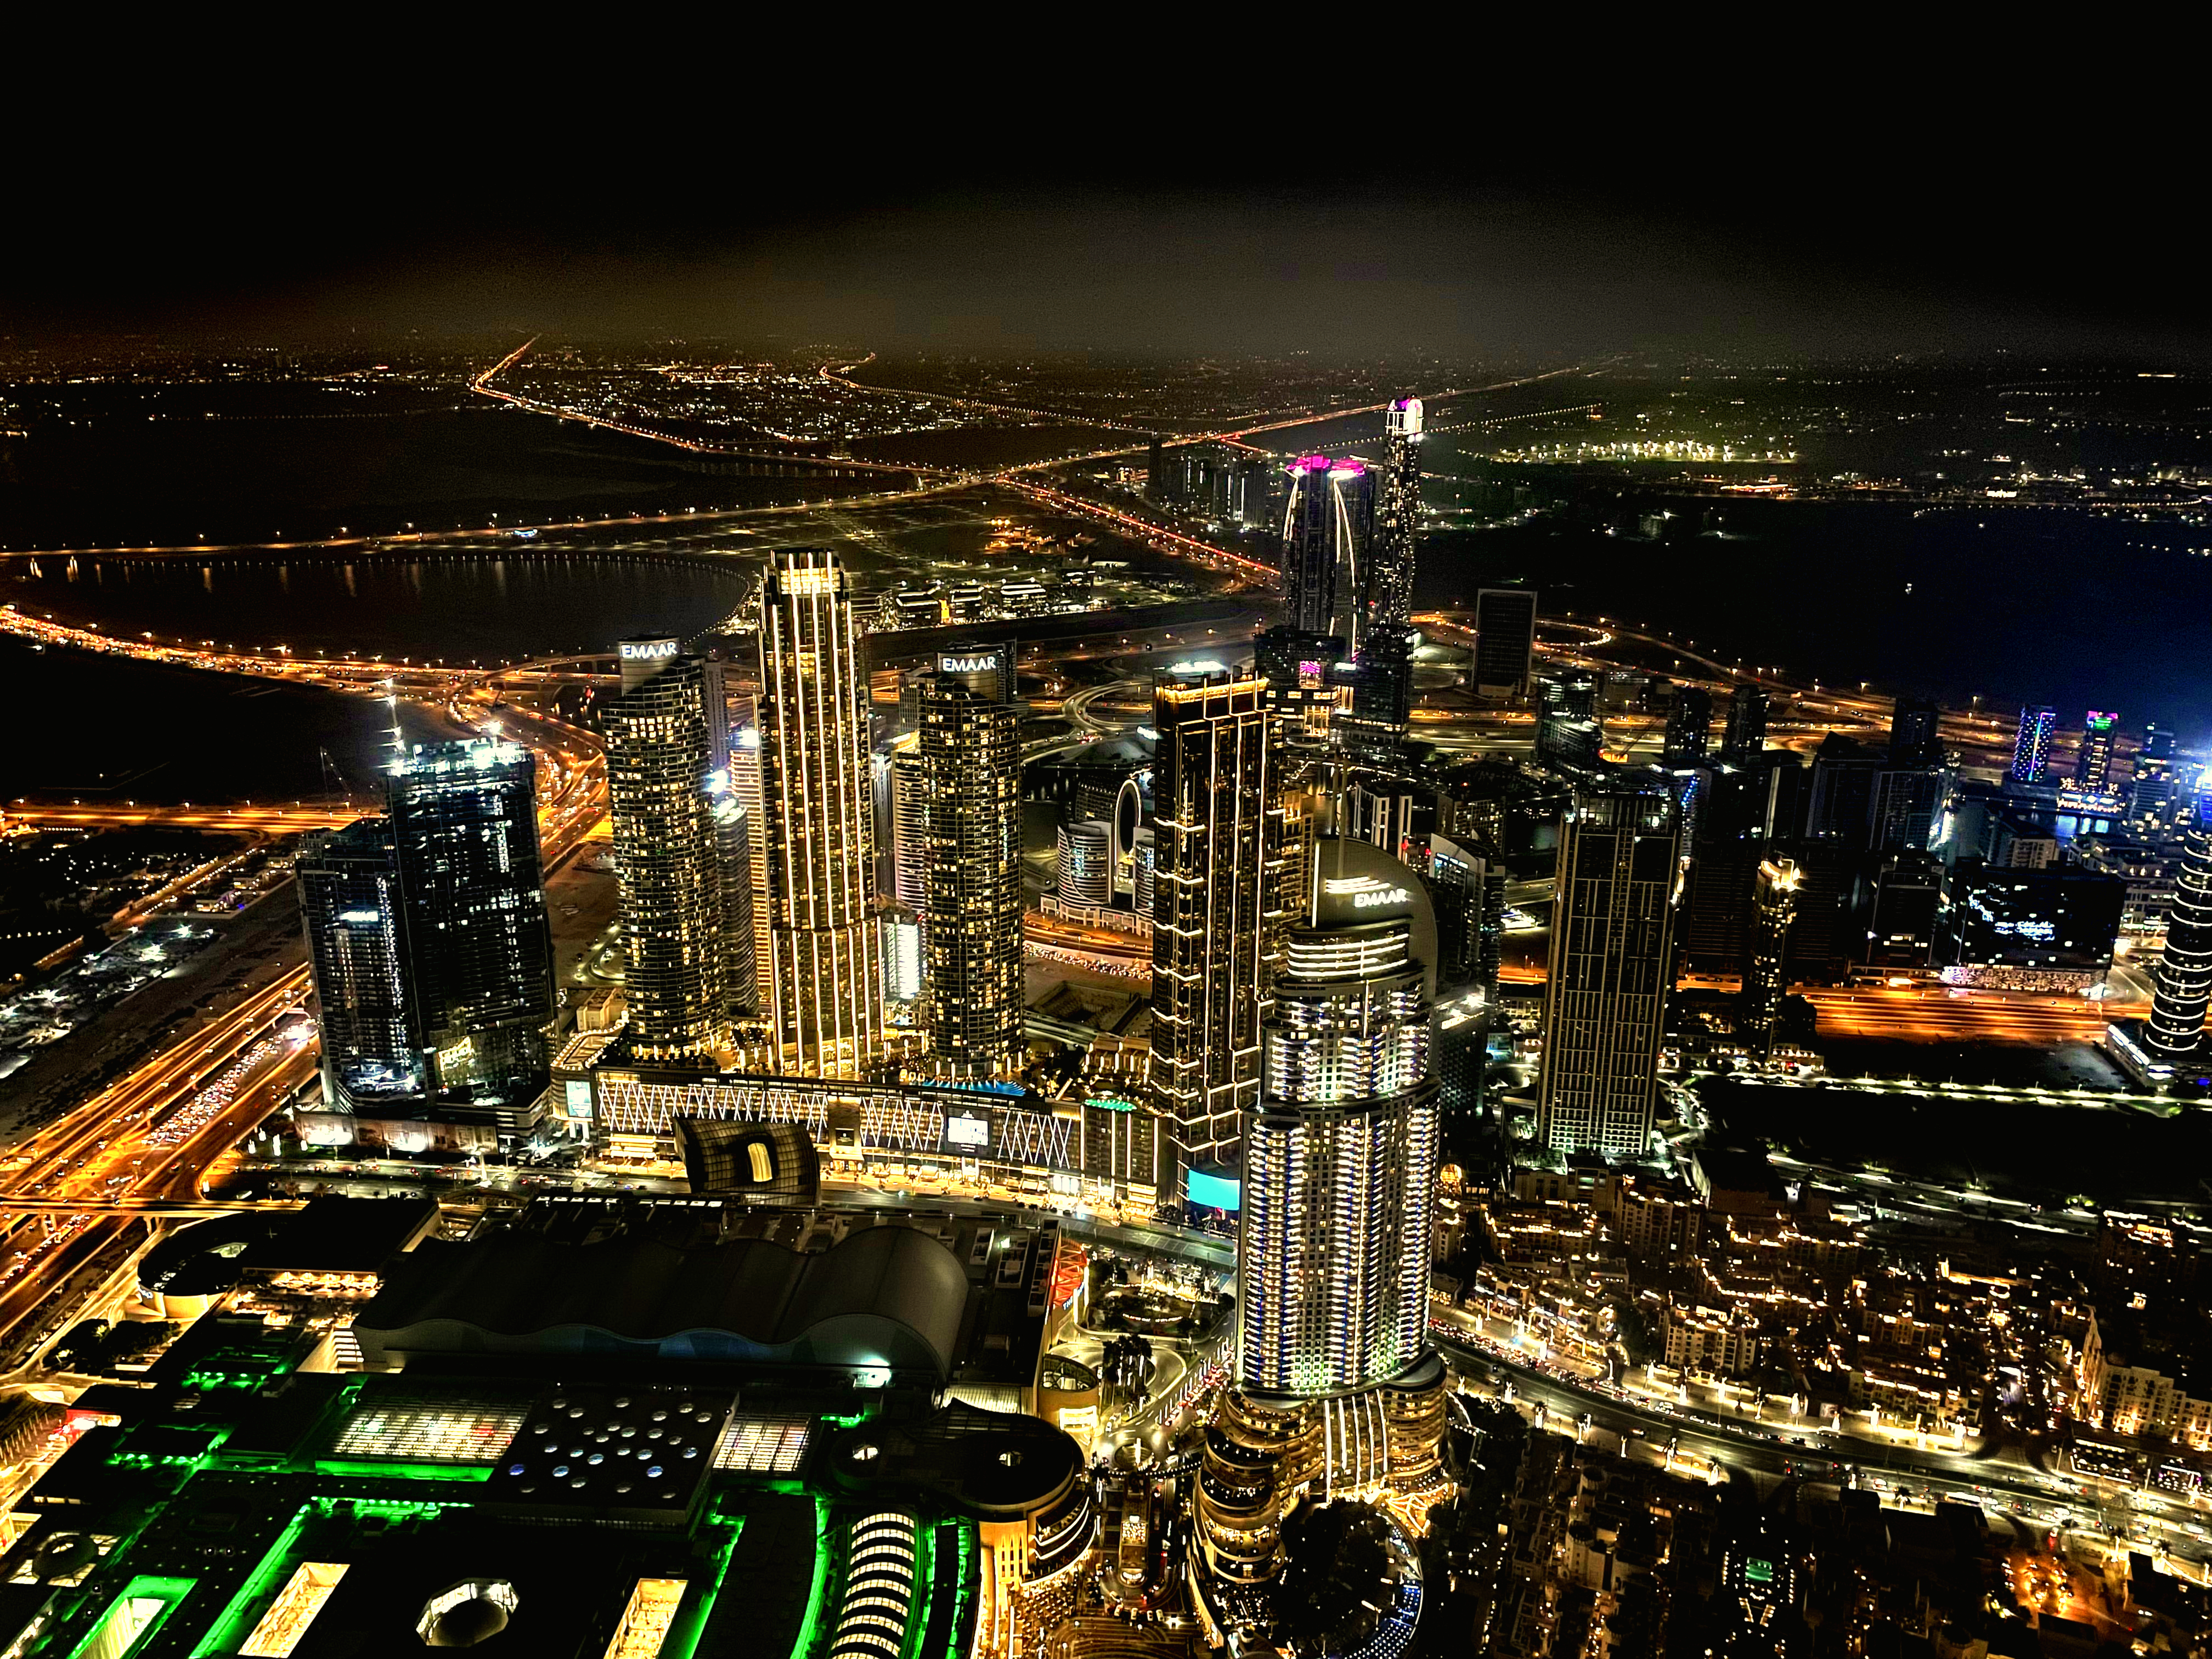 Dubai at Night Wallpaper by Logitze33